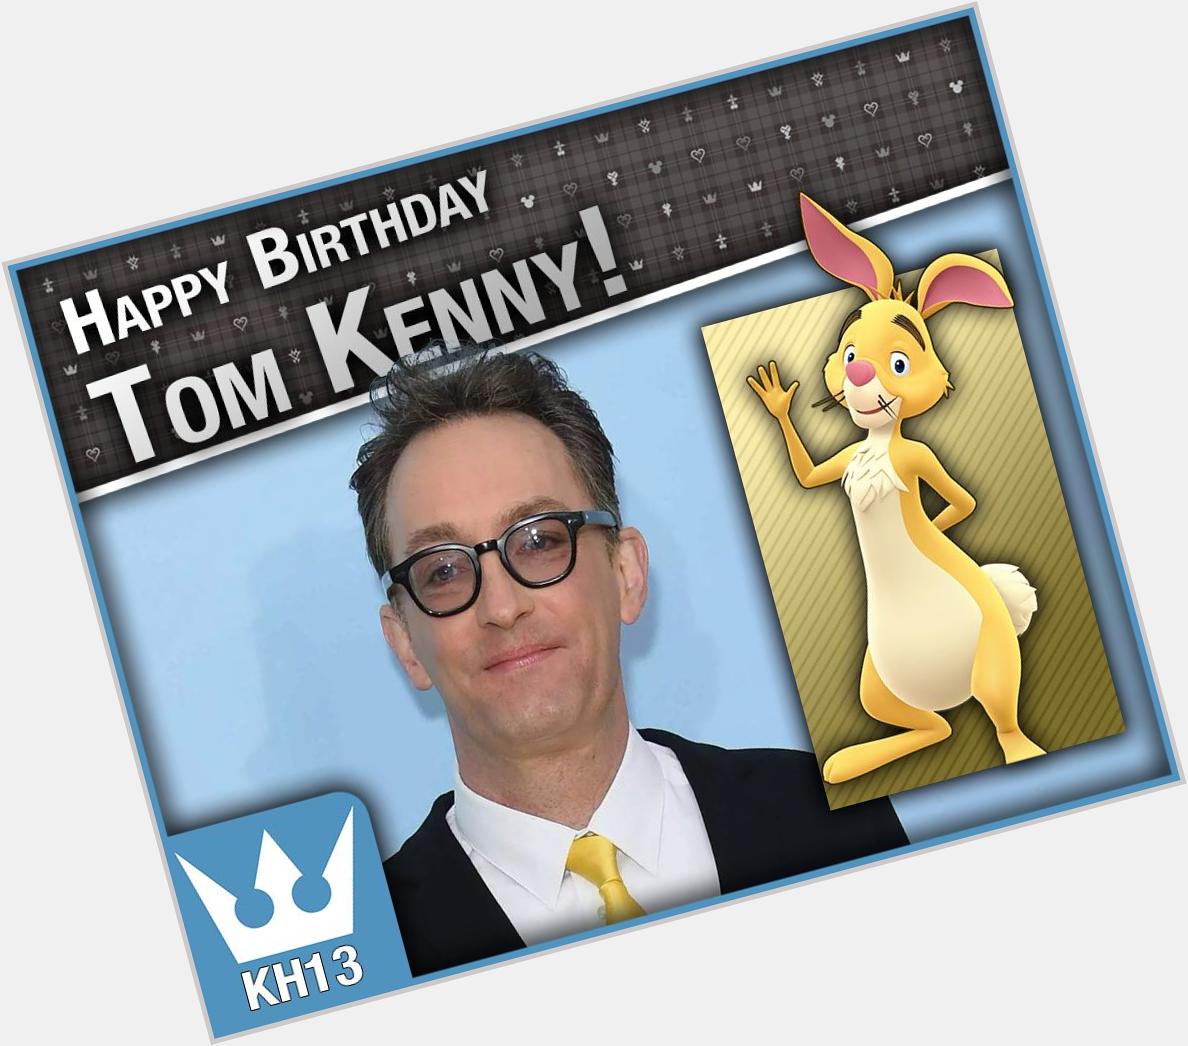  Happy 57th Birthday to Tom Kenny, the voice of Rabbit from Kingdom Hearts III!

 